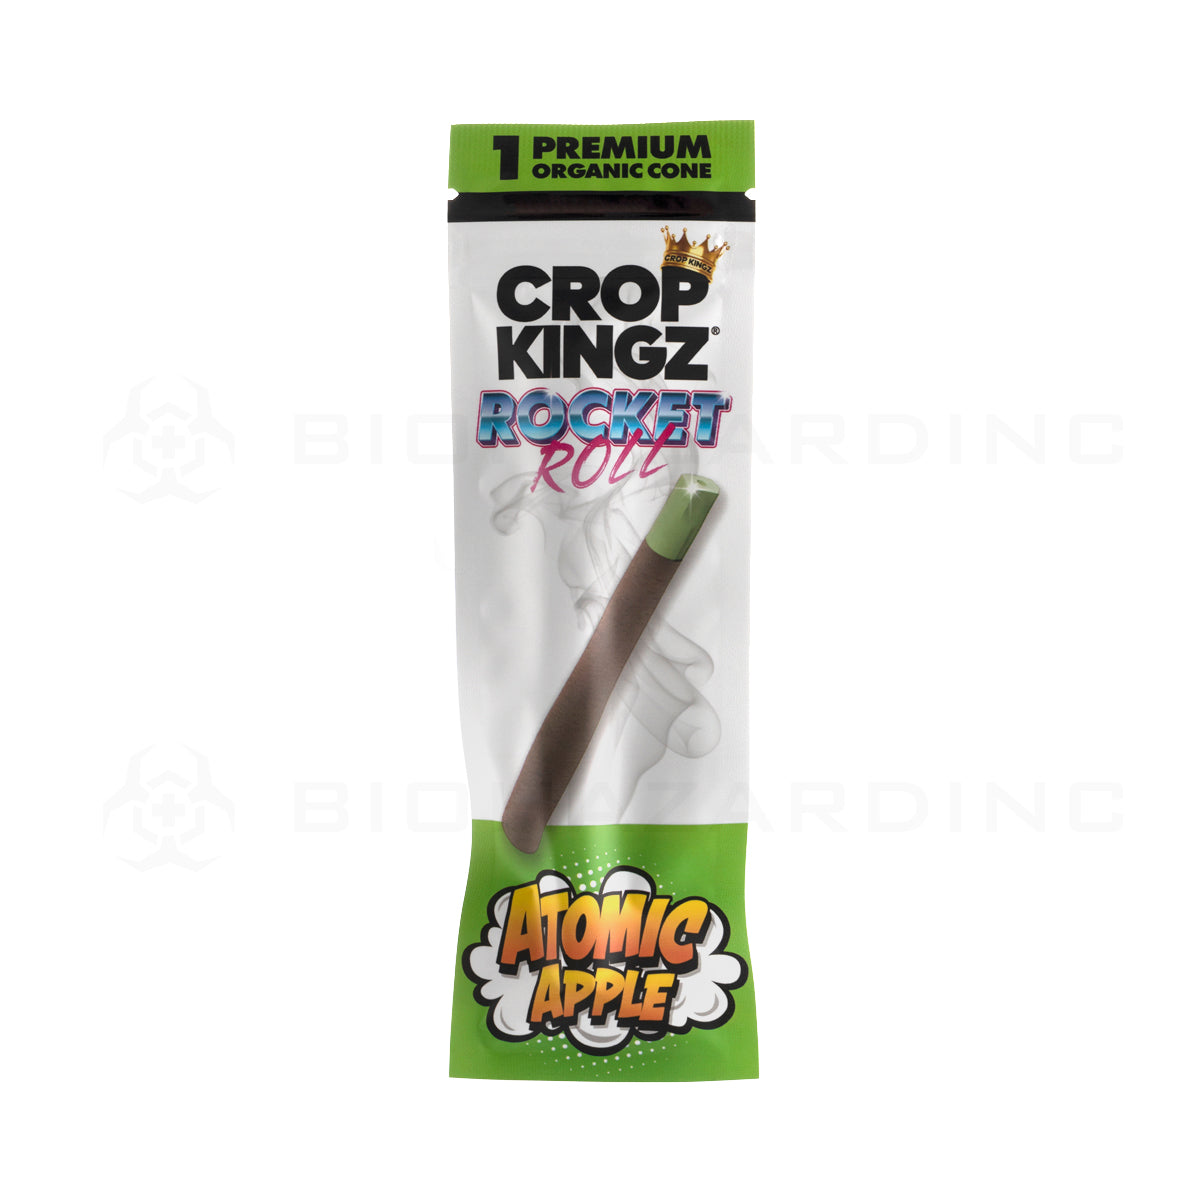 Crop Kingz | Rocket Roll Organic Hemp Wrap | Atomic Apple - 15 Count Hemp Wraps Crop Kingz   